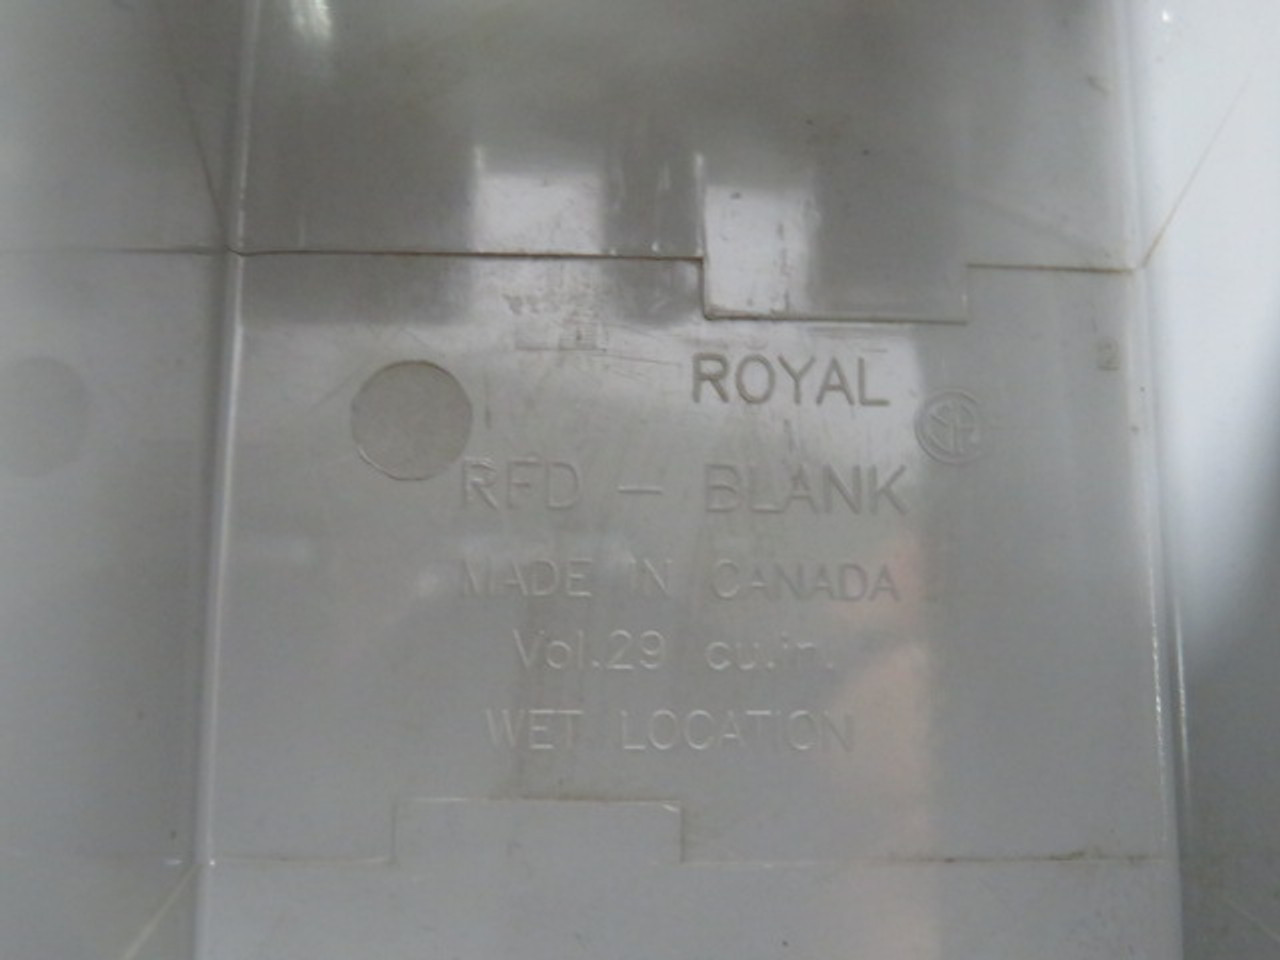 Royal RFD-BLANK Rigid PVC Conduit Gang Box 29" CU Interior USED